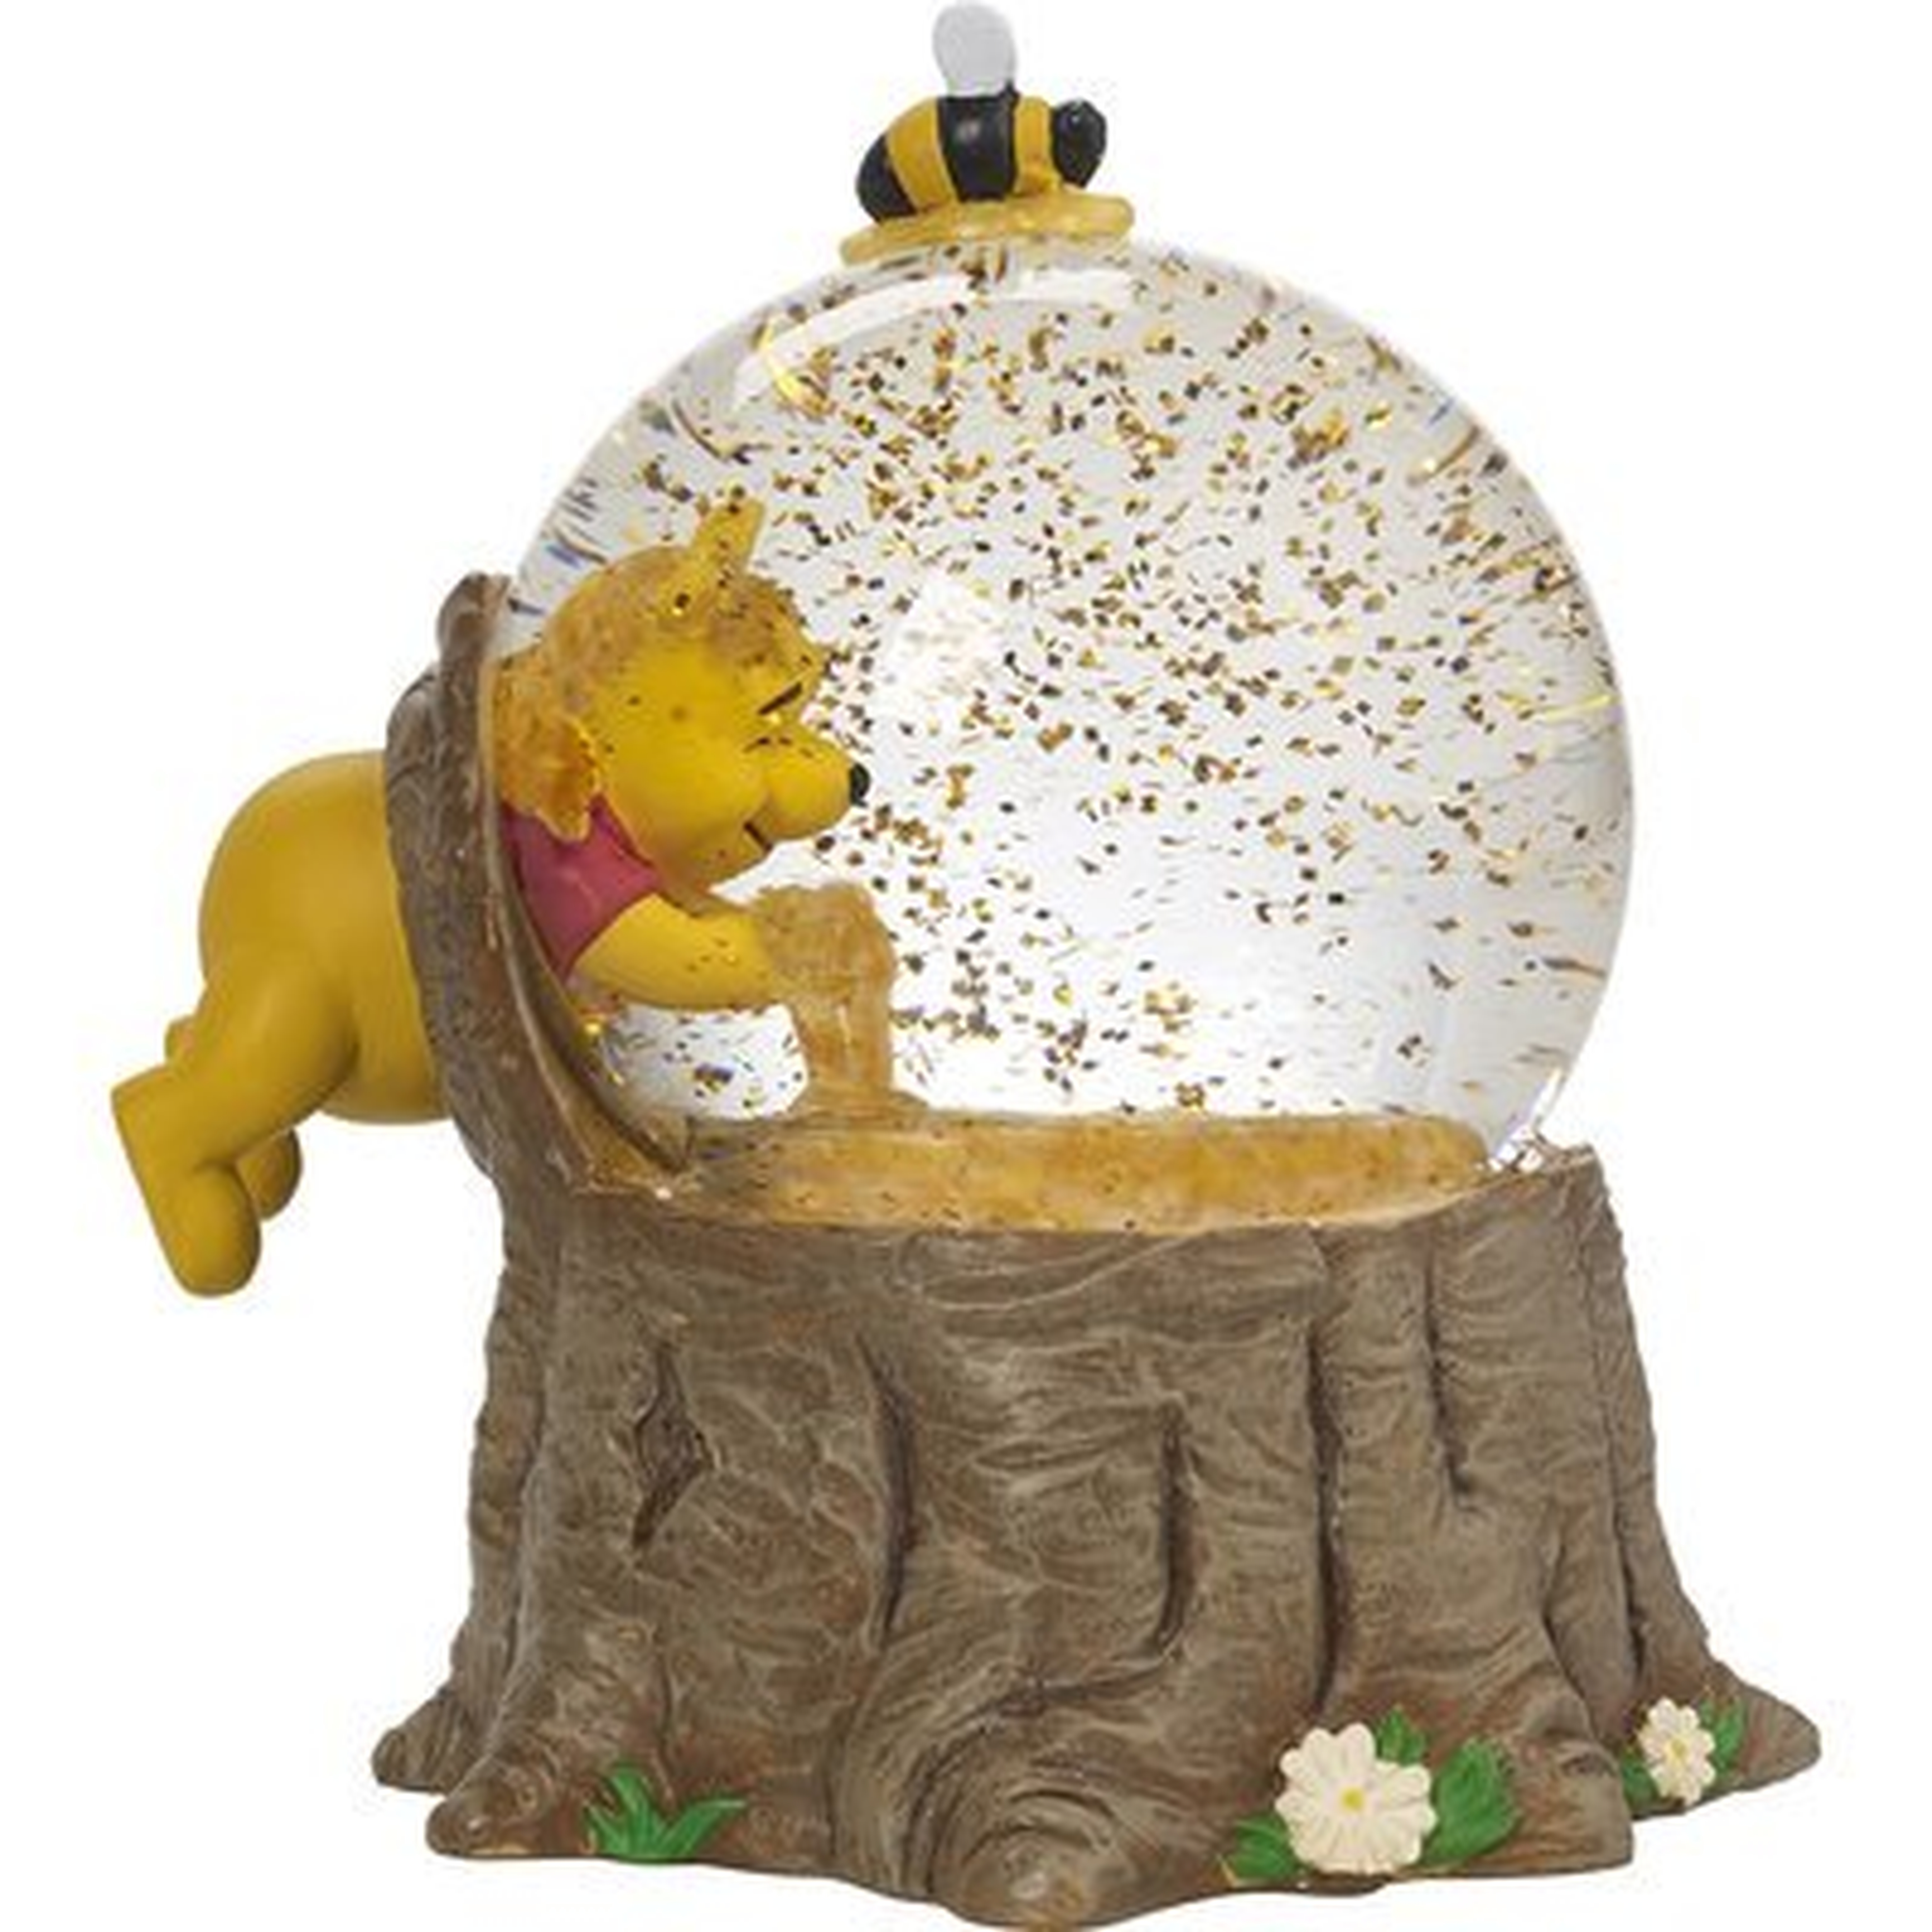 Disney Showcase Winnie the Pooh Musical Snow Globe For the Love of Hunny Resin and Glass Figurine - Wayfair